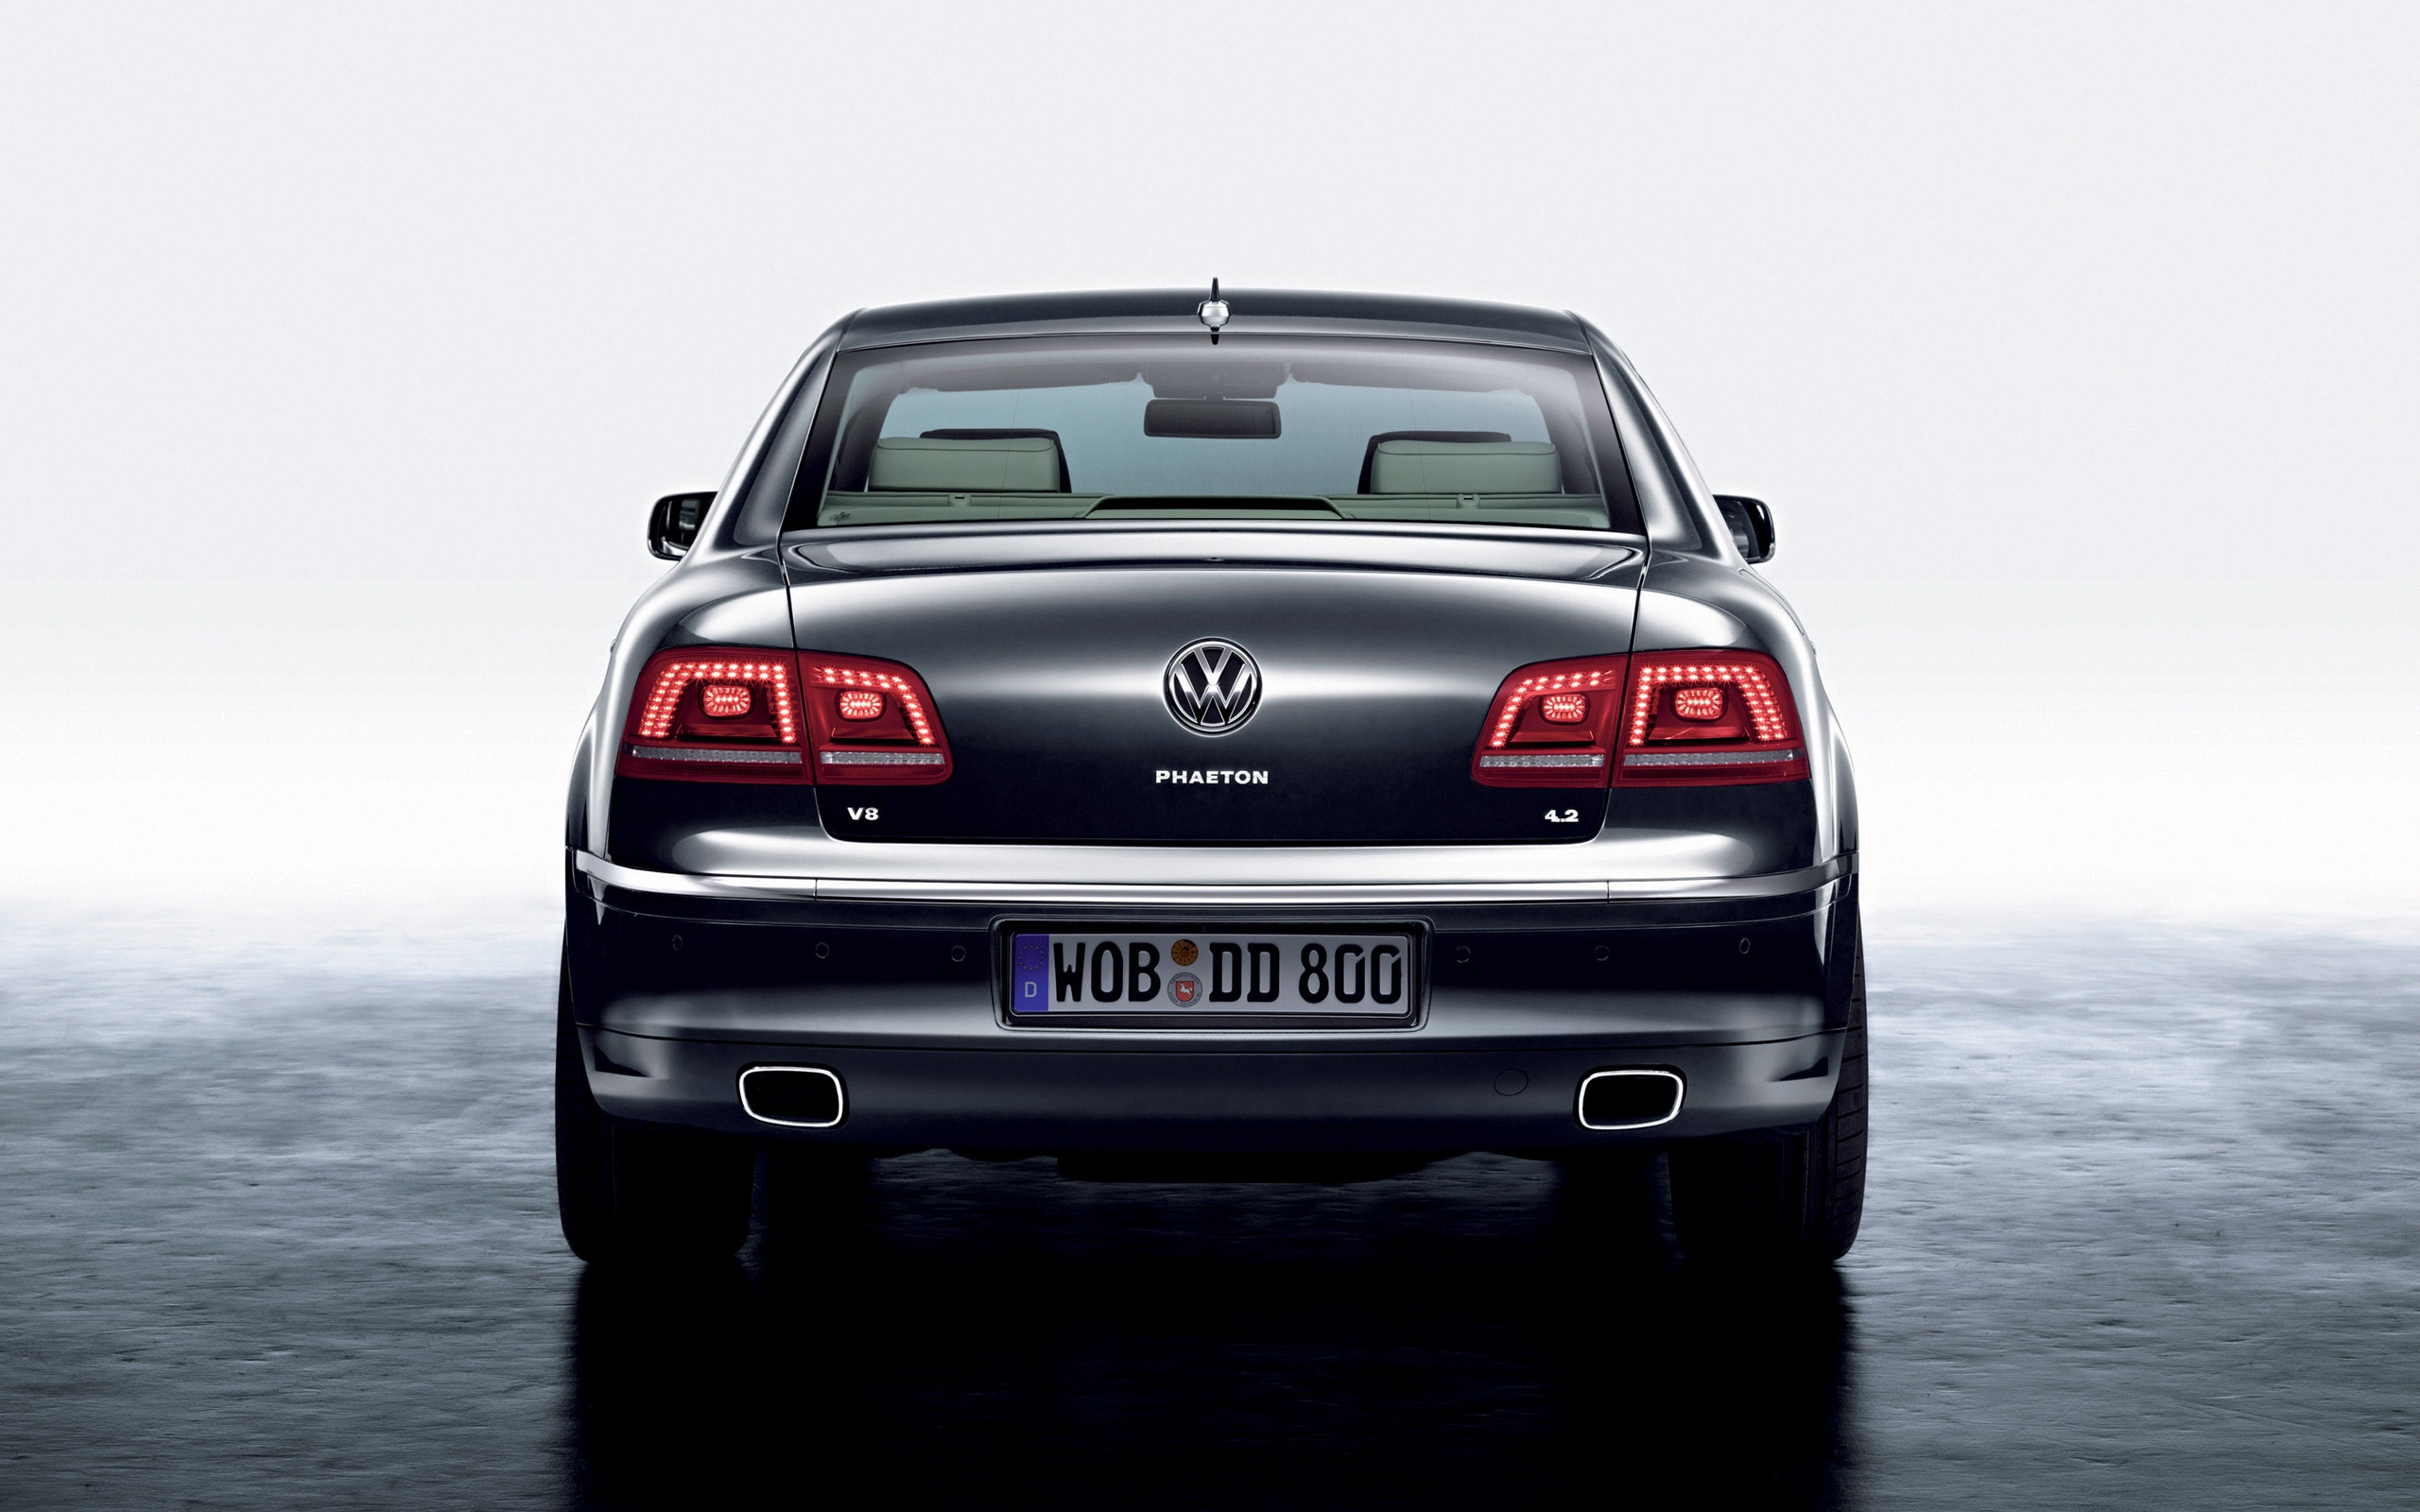 Volkswagen Phaeton Rear for 2560 x 1600 widescreen resolution